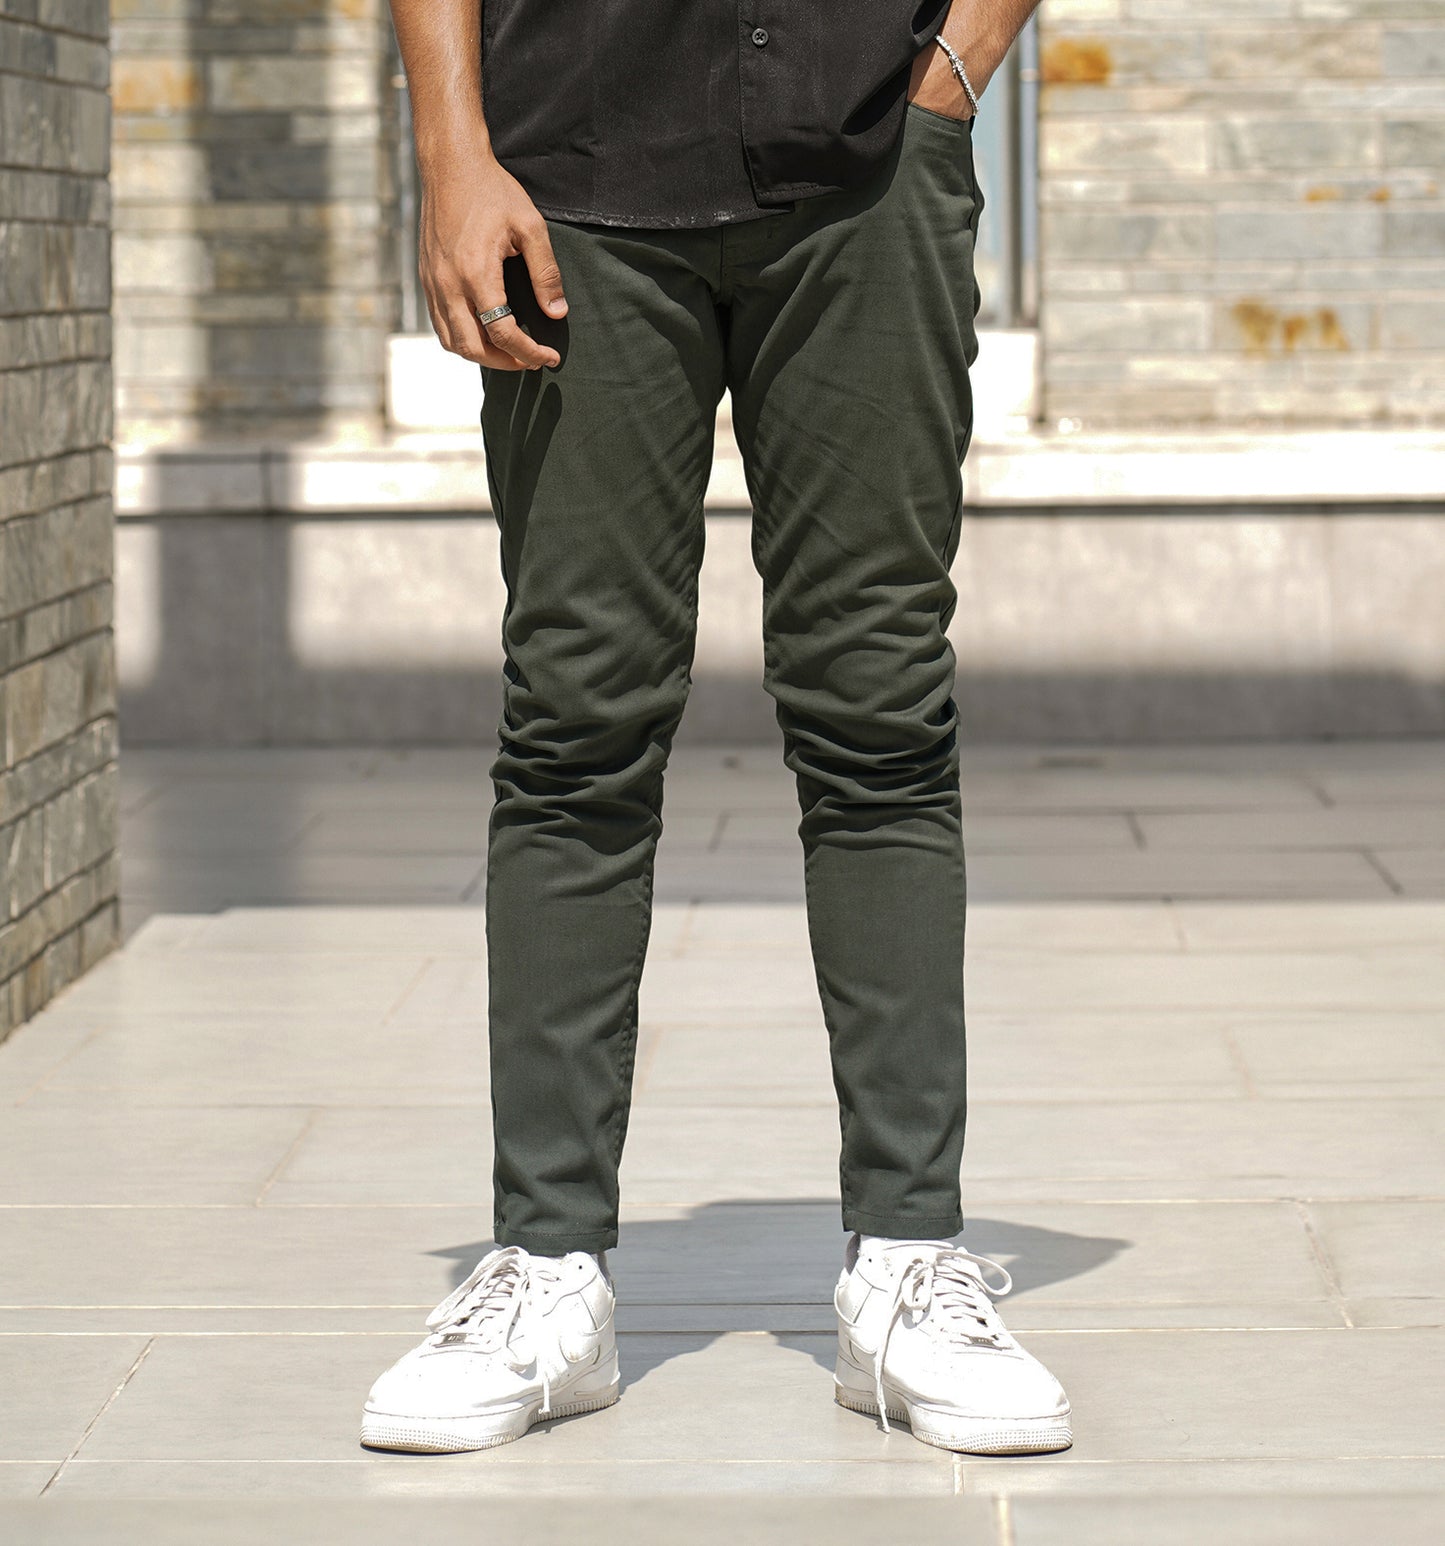 John Trousers - Dark Green Pants for Men